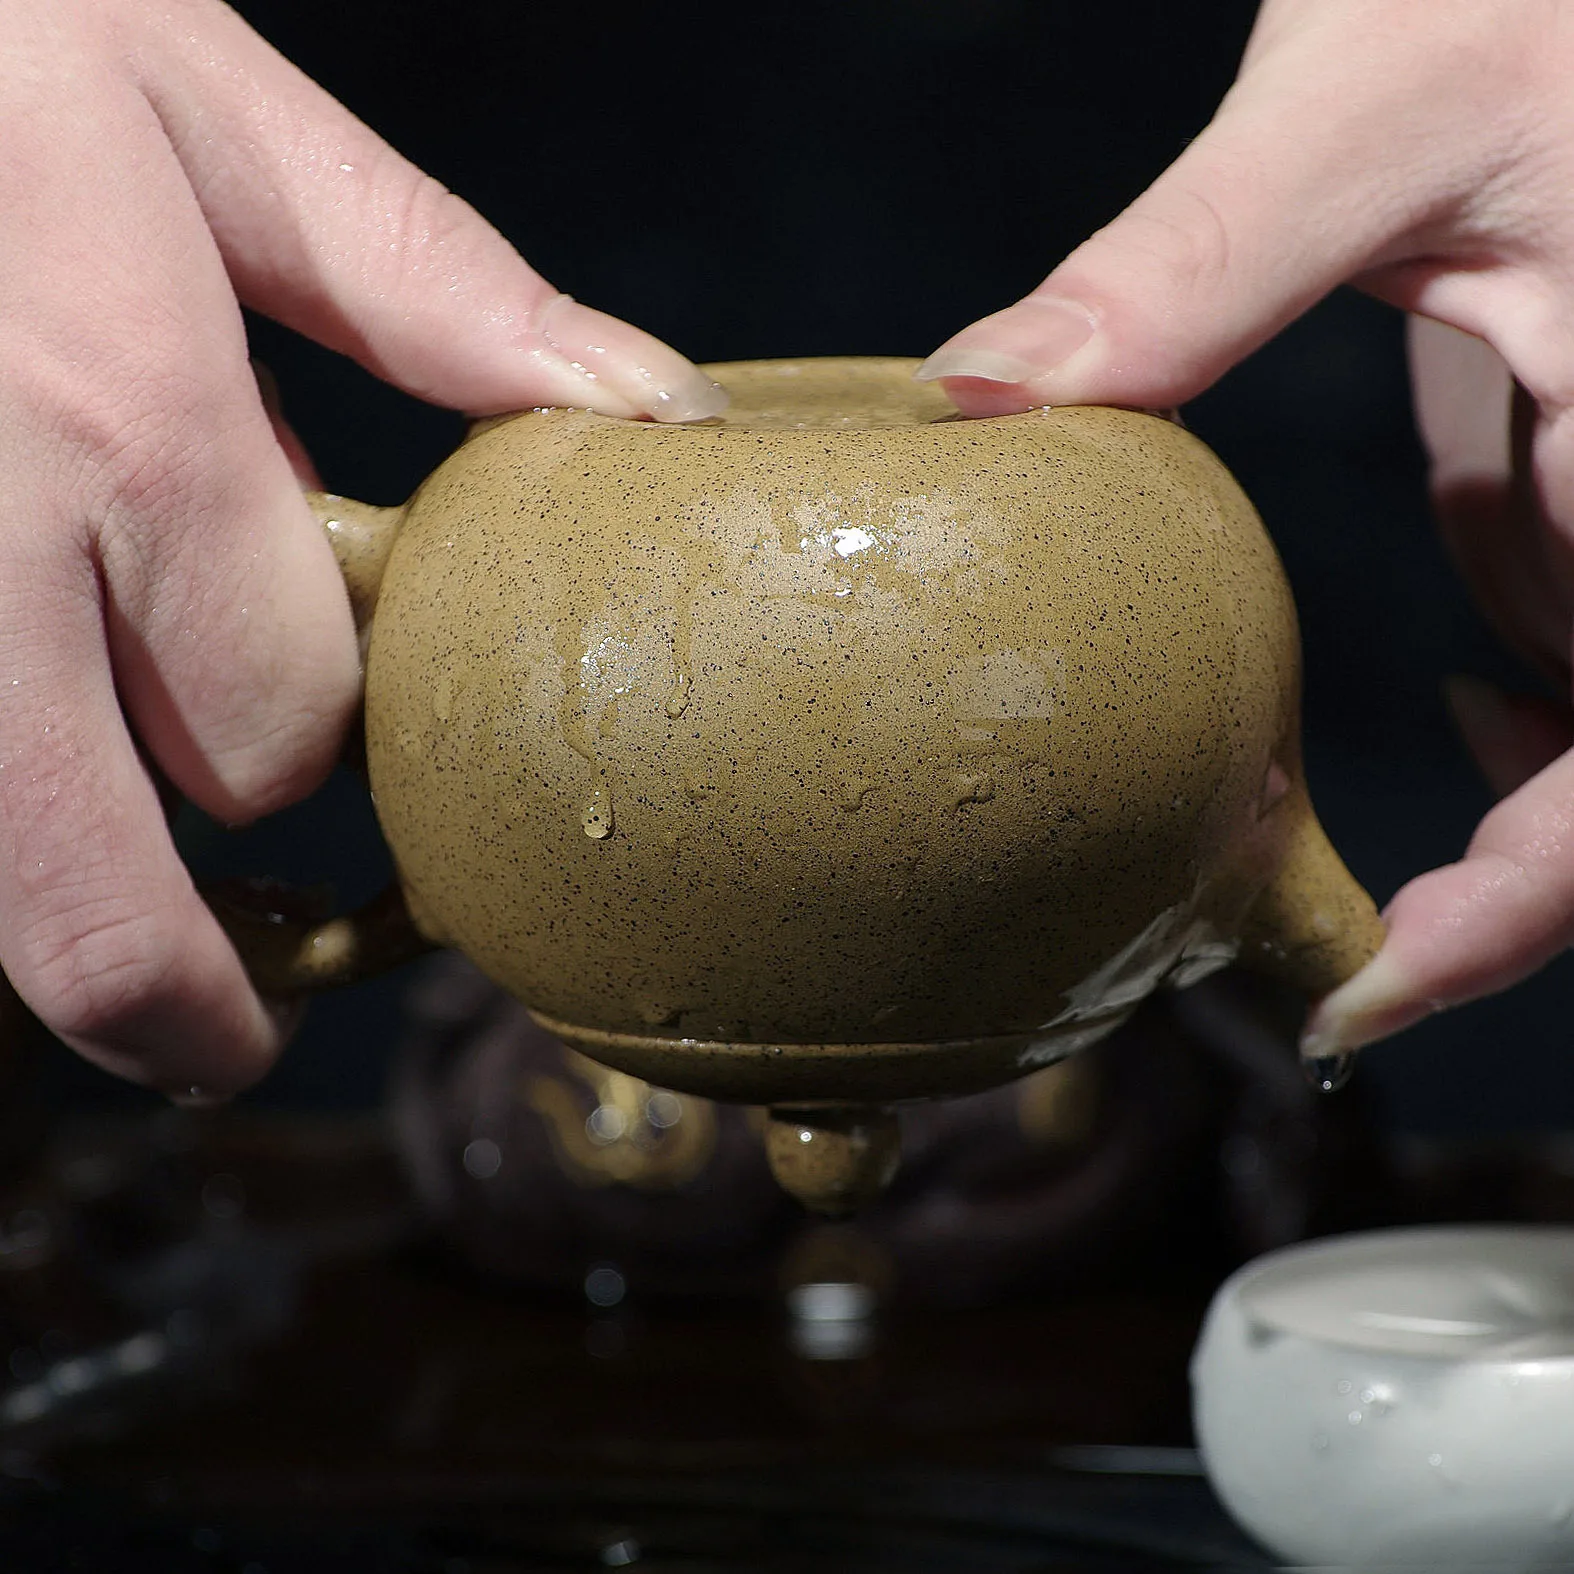 

Yixing Ceramic Teapot Clay Tea Pot 250ml Chinese Handmade Teapots Set Zisha Porcelain Kettle Kung Fu Ceremony Pottery Gift